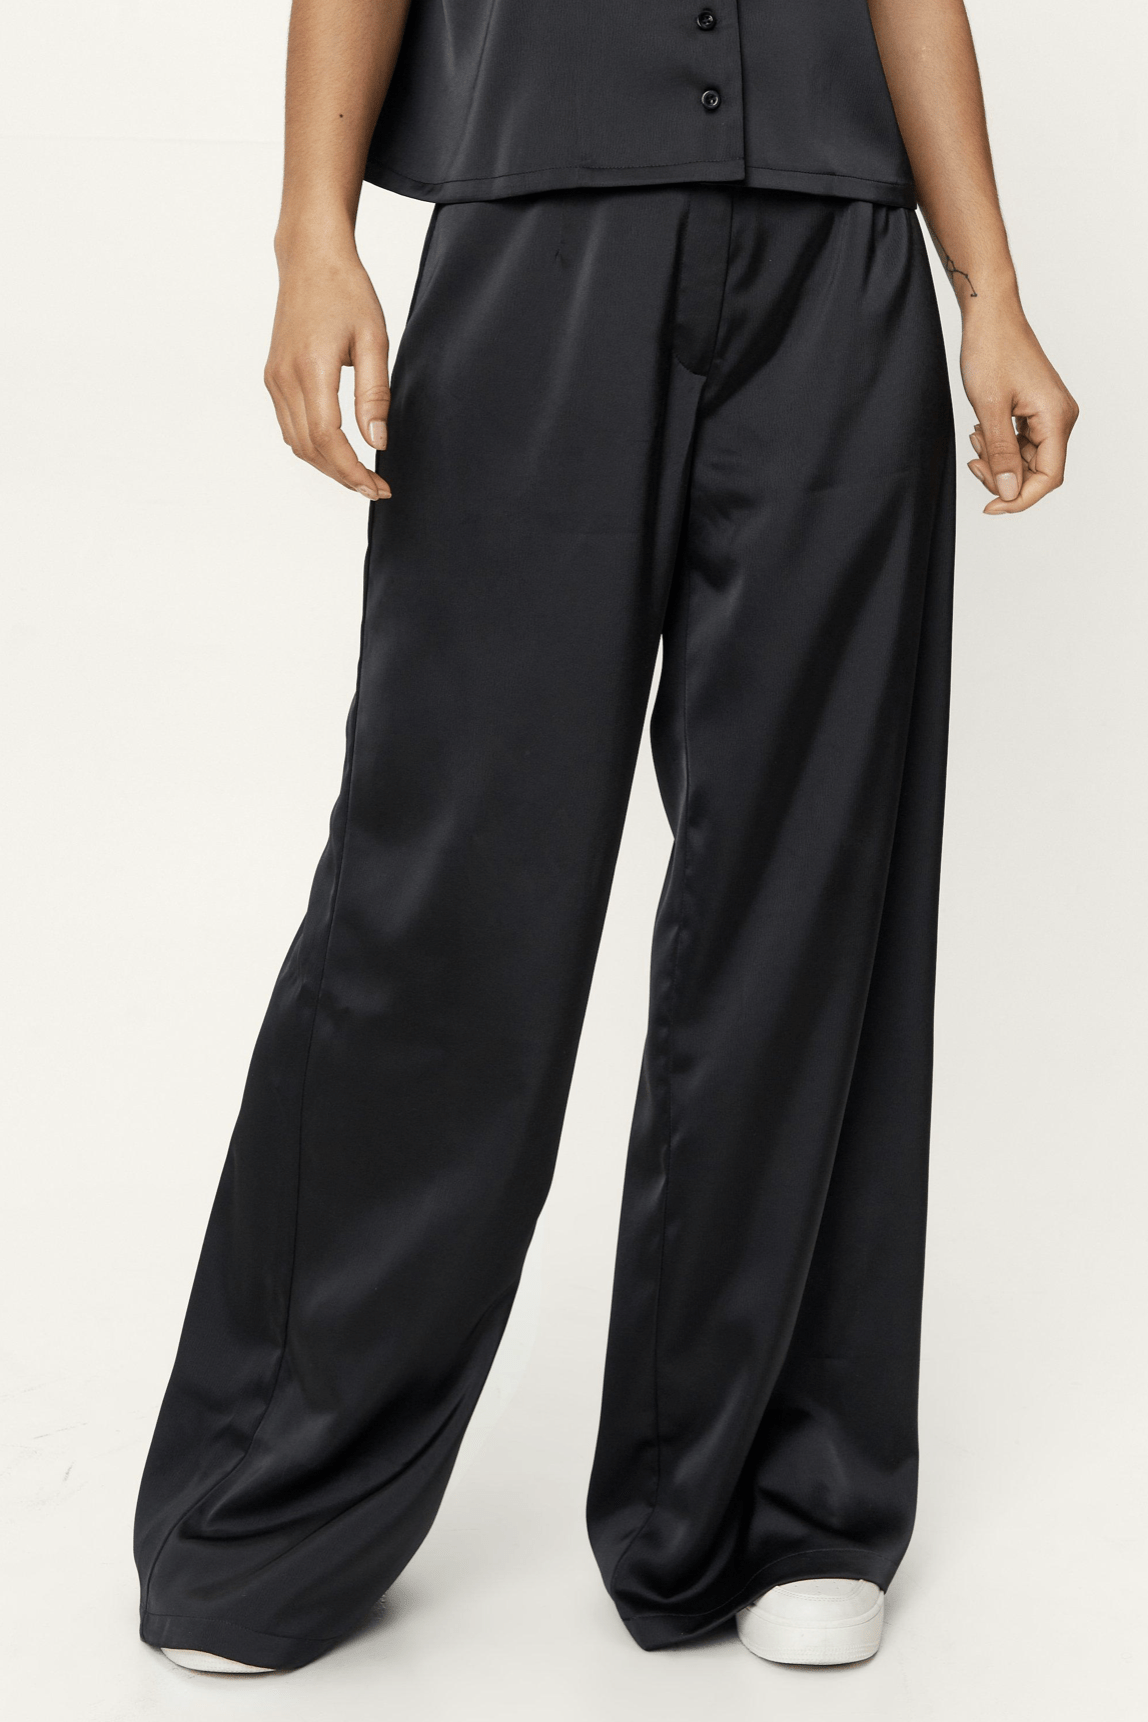 Black High Waist Satin Pants with Side Pockets – Mystique-Online